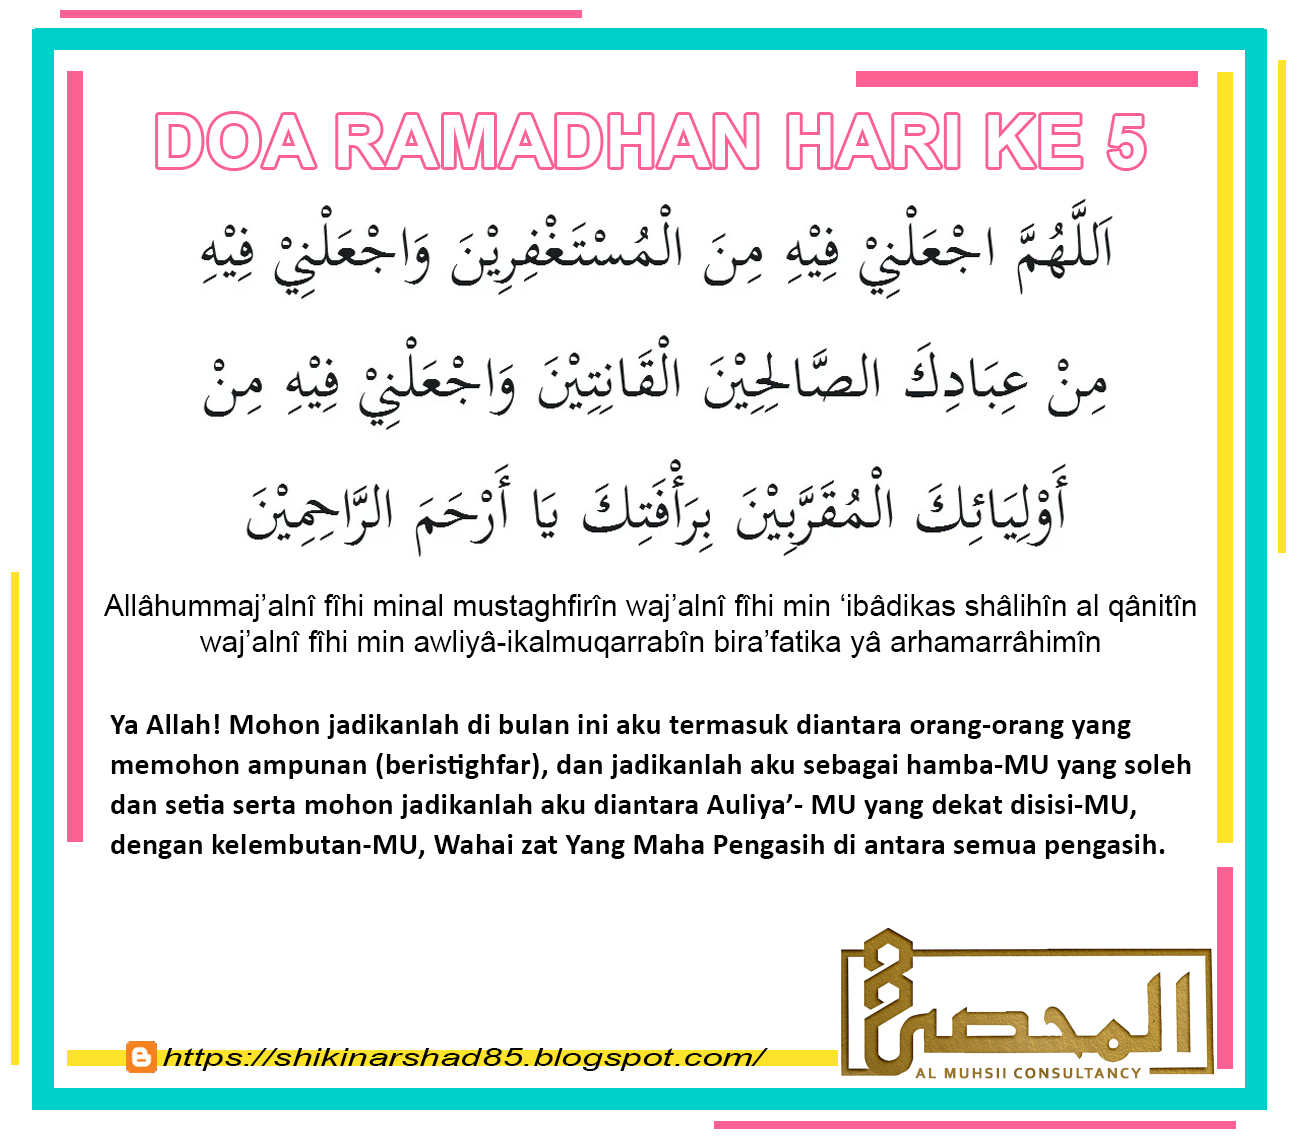 5 ke ramadhan doa hari 5 Doa